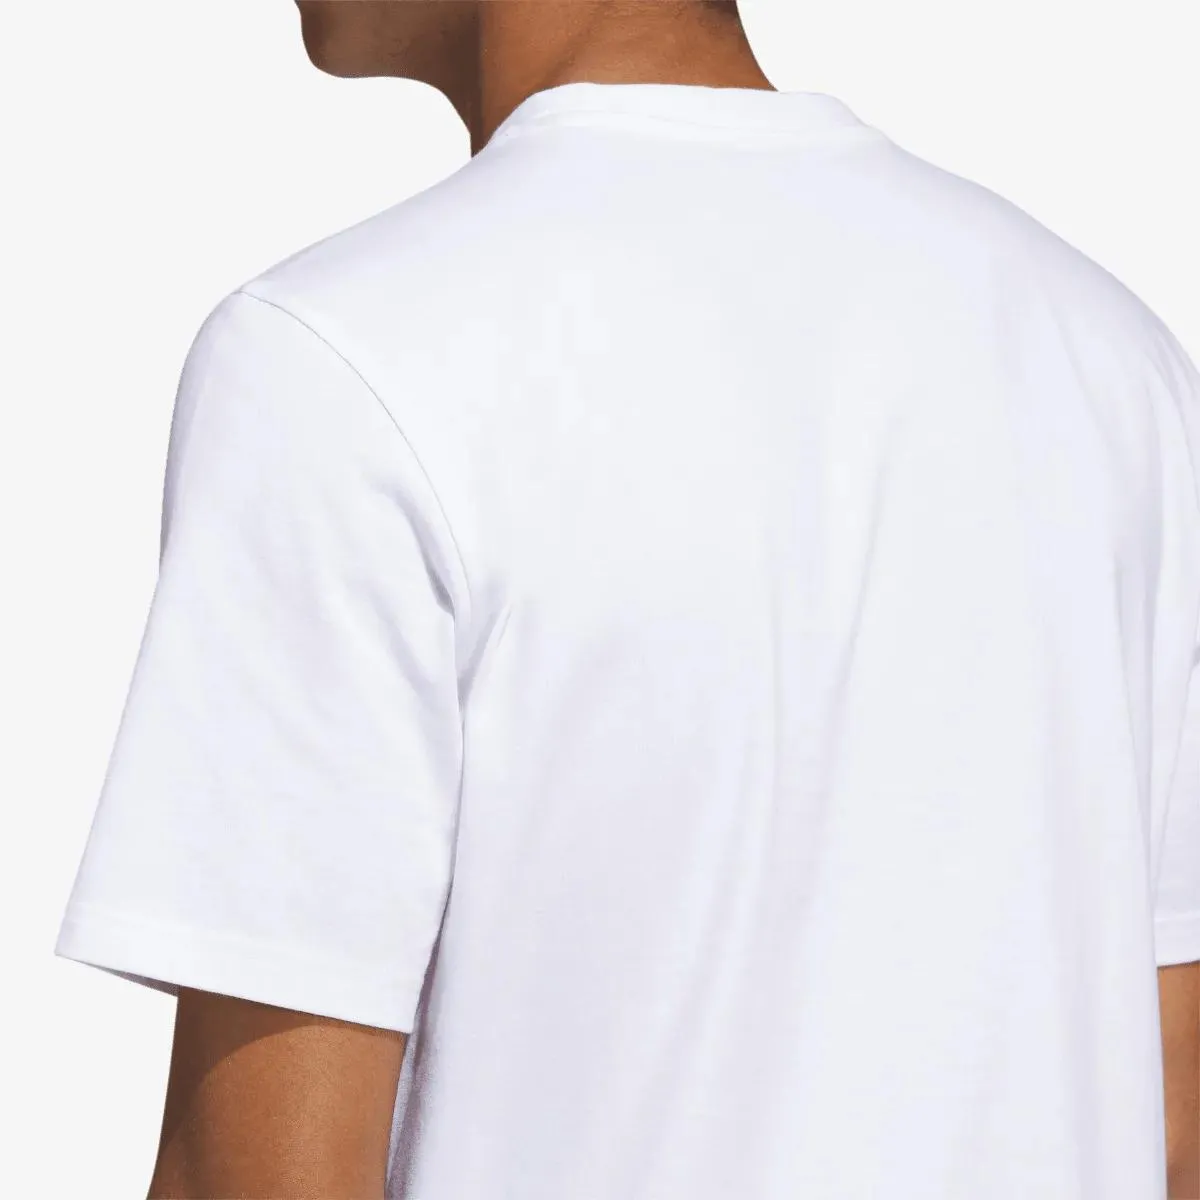 adidas T-shirt FUTURE ICONS GRAPHIC 